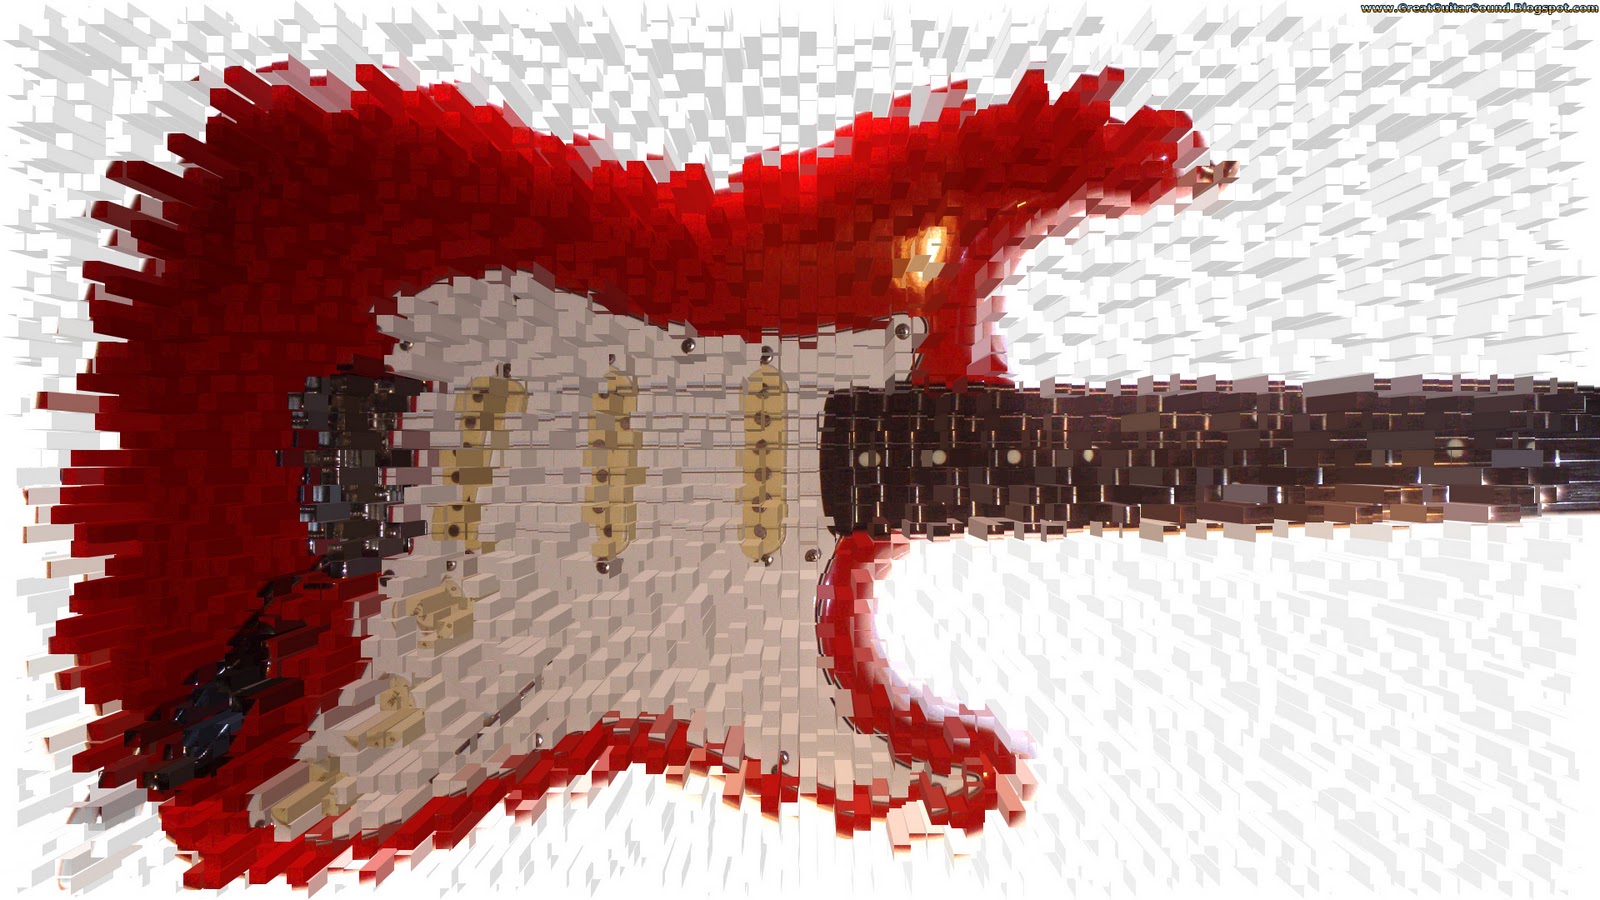 https://blogger.googleusercontent.com/img/b/R29vZ2xl/AVvXsEjEI__omF6ujJ8rd4mMwV3o14-KSmYK1QWqqbYRH7Xf9Ec5nYWSUCvLpphULvsAkqYGYoqmRdctPmwkaor3wWpv2rQYPqEDTZUACiSV8YFKrWmL9D05OnyUTuRXNSnSw-LWDNngLW0-eHDR/s1600/Red+Fender+Stratocaster+Electric+Guitar+Lego+Blocks+Extrude+Background+HD+Guitar+Music+Desktop+Wallpaper+1920x1080+Great+Guitar+Sound+www.GreatGuitarSound.Blogspot.com.jpg